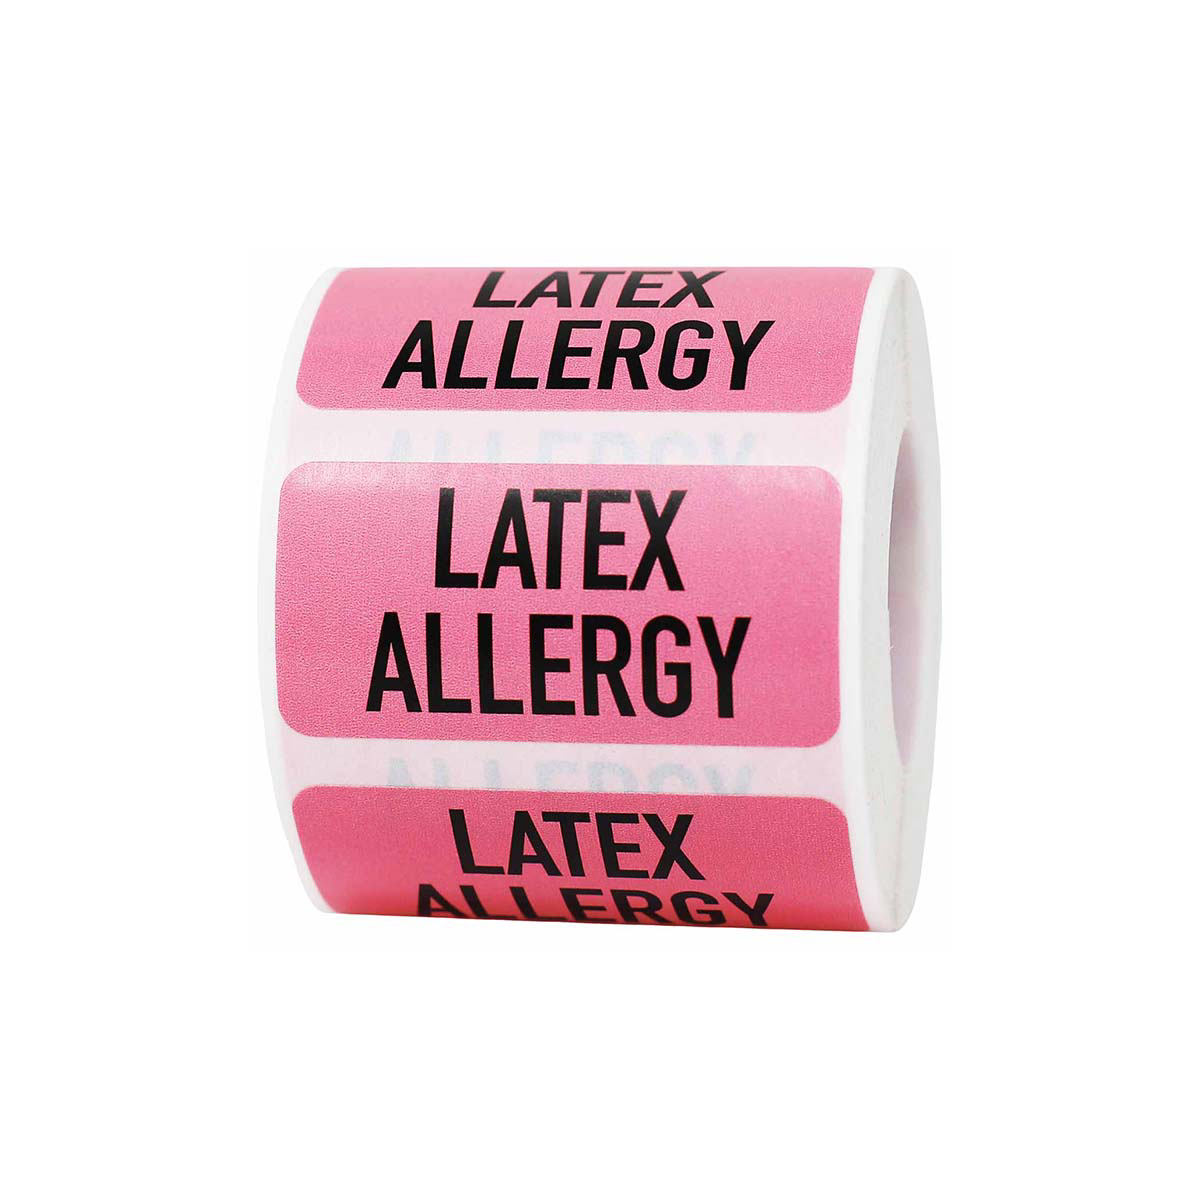 Latex allergy